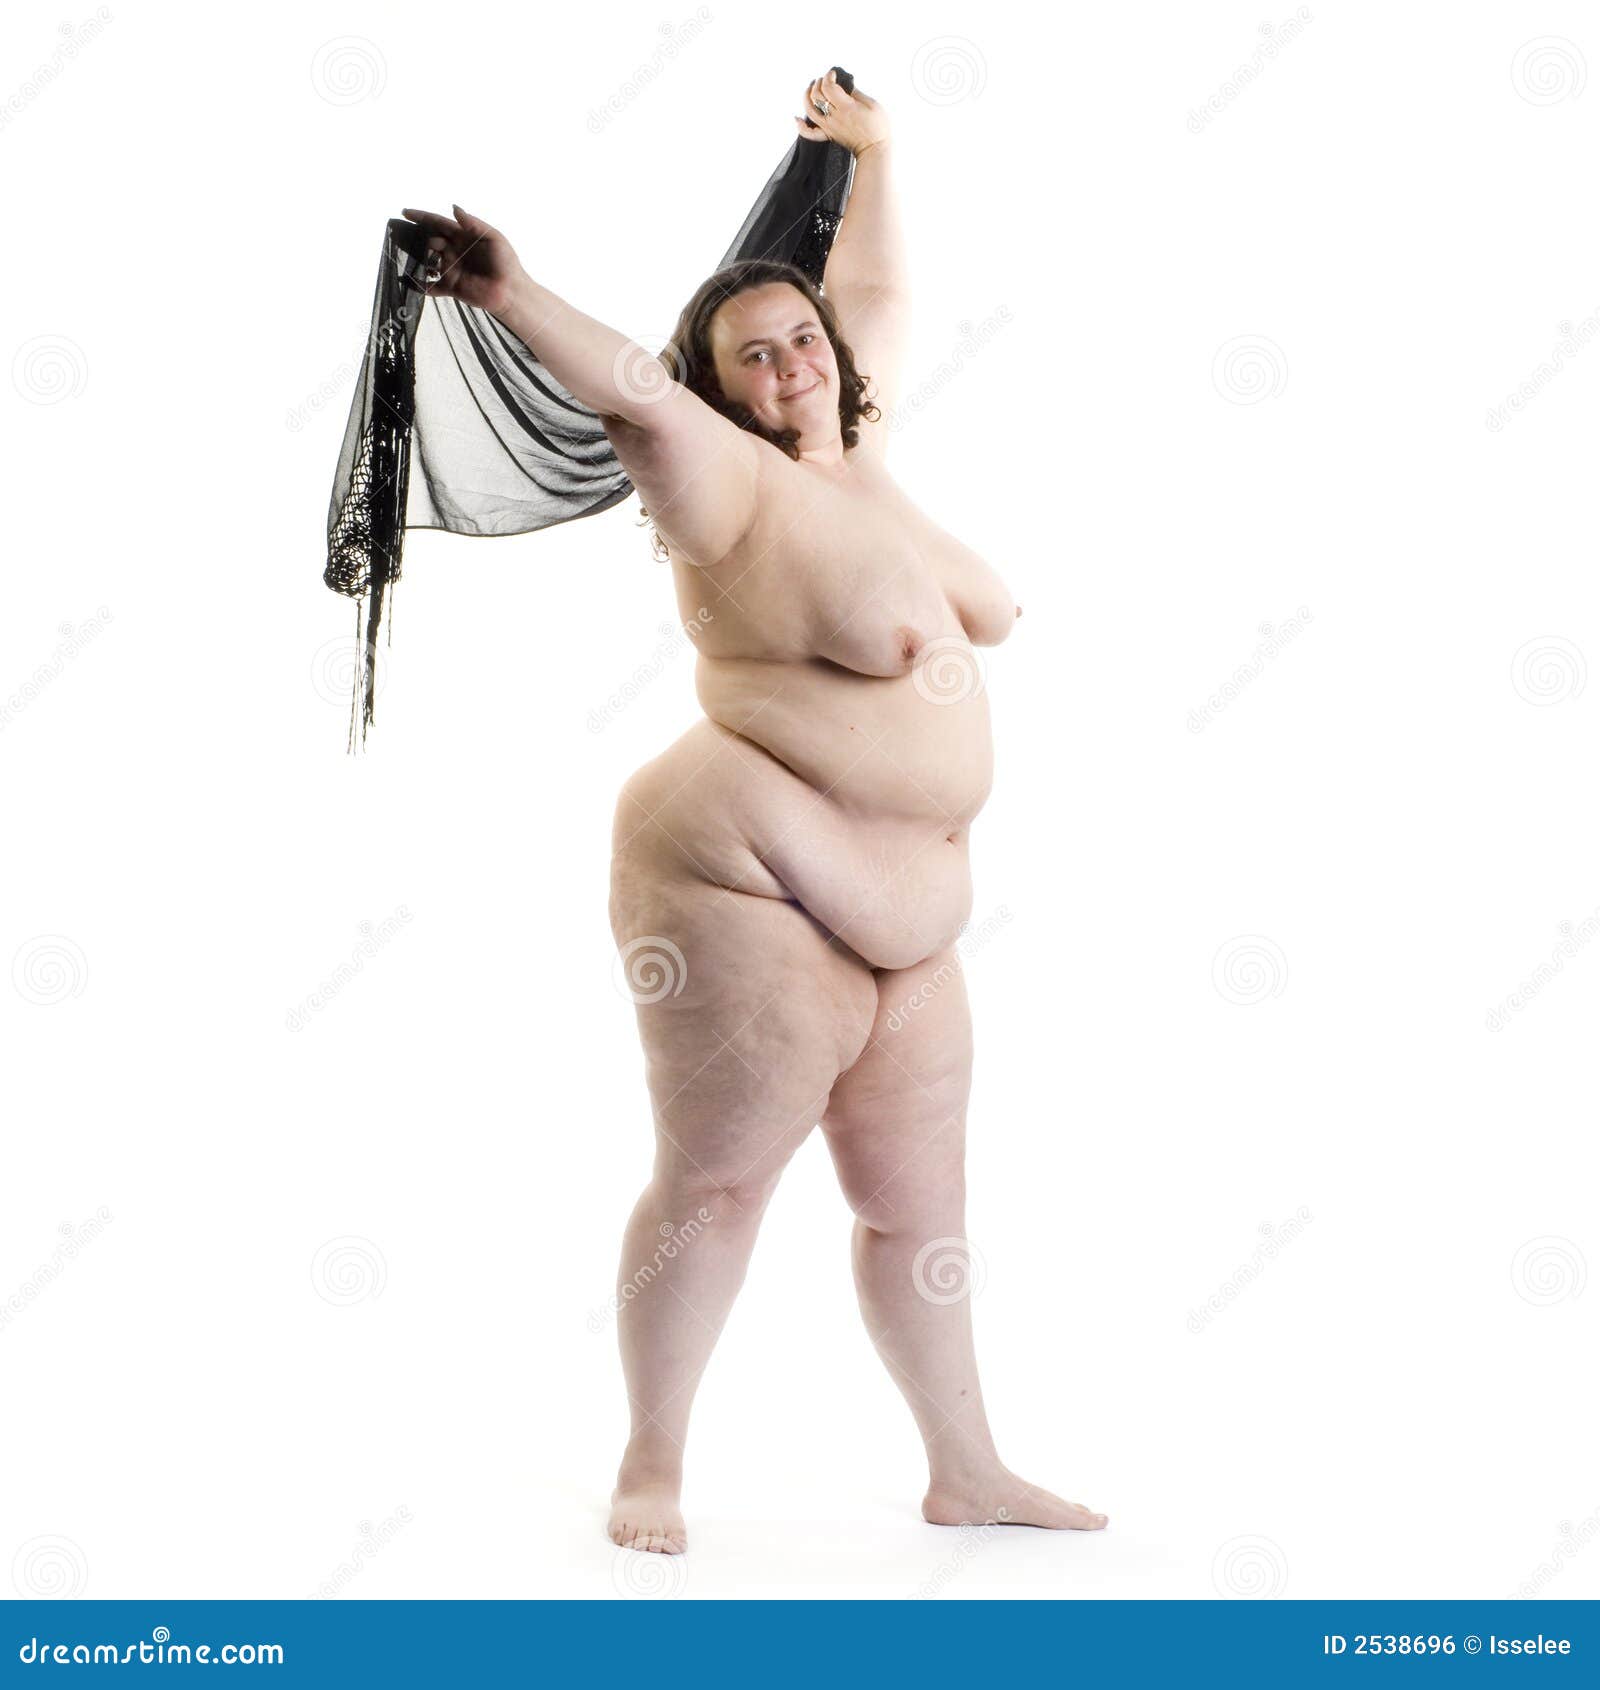 brad sonnenberg reccomend obese naked woman pic